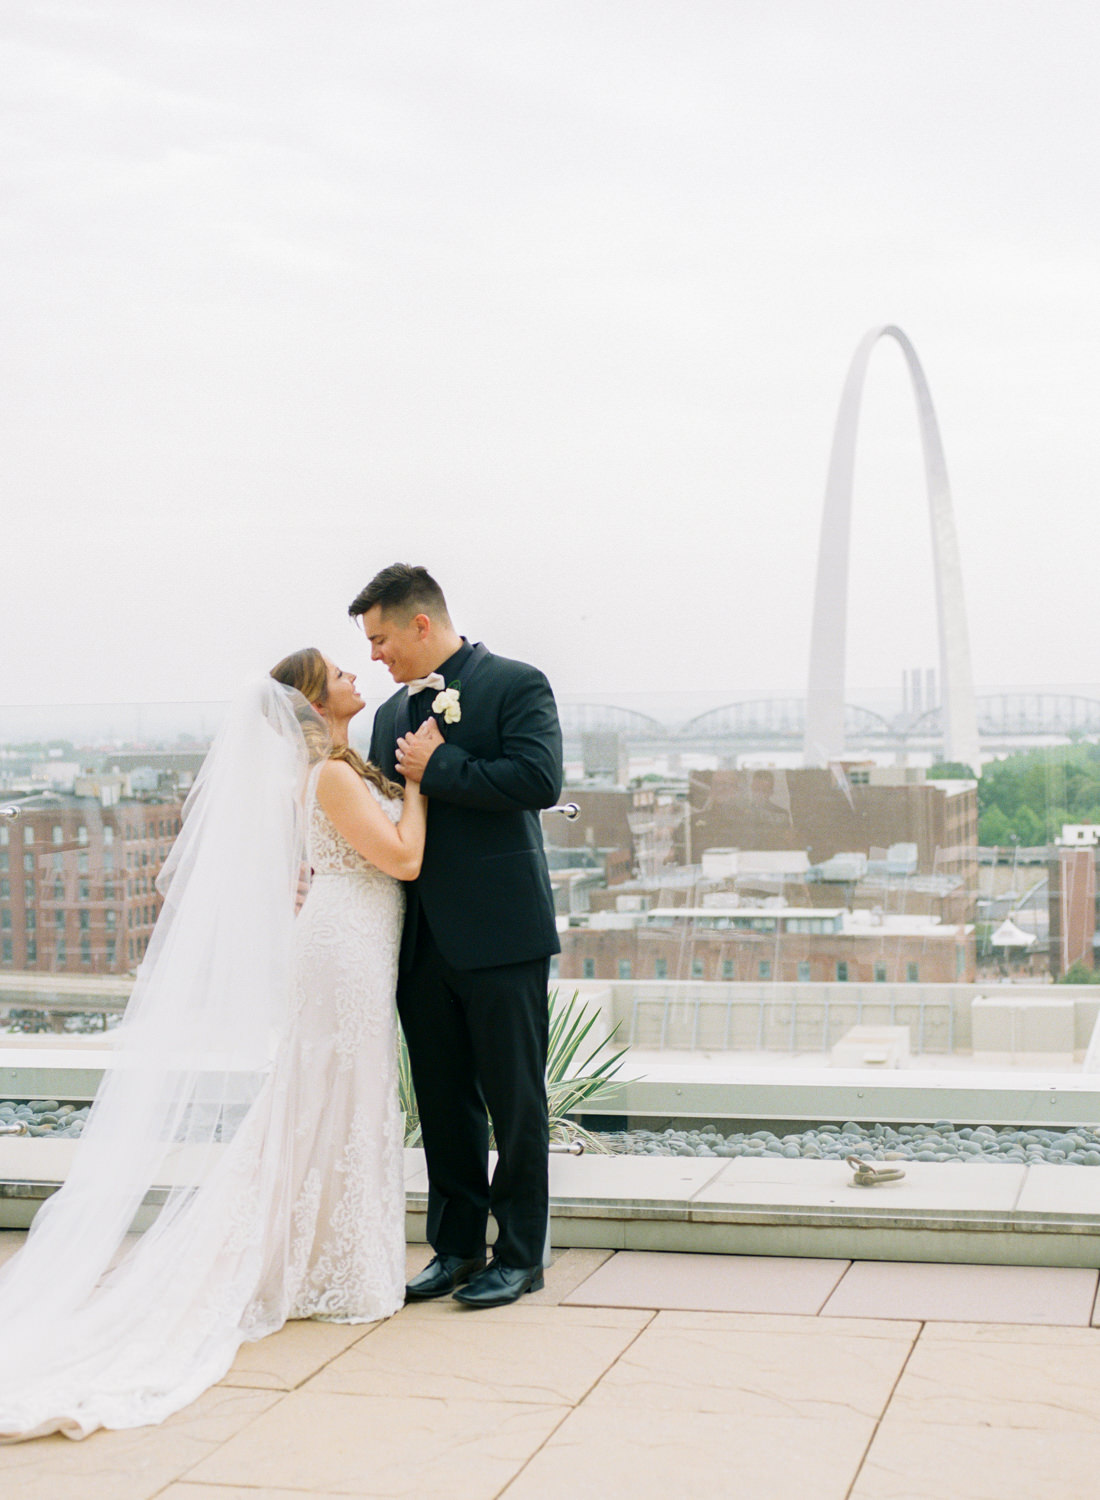 Jennifer and Robbie's Four Seasons St. Louis Wedding | Erica Robnett ...